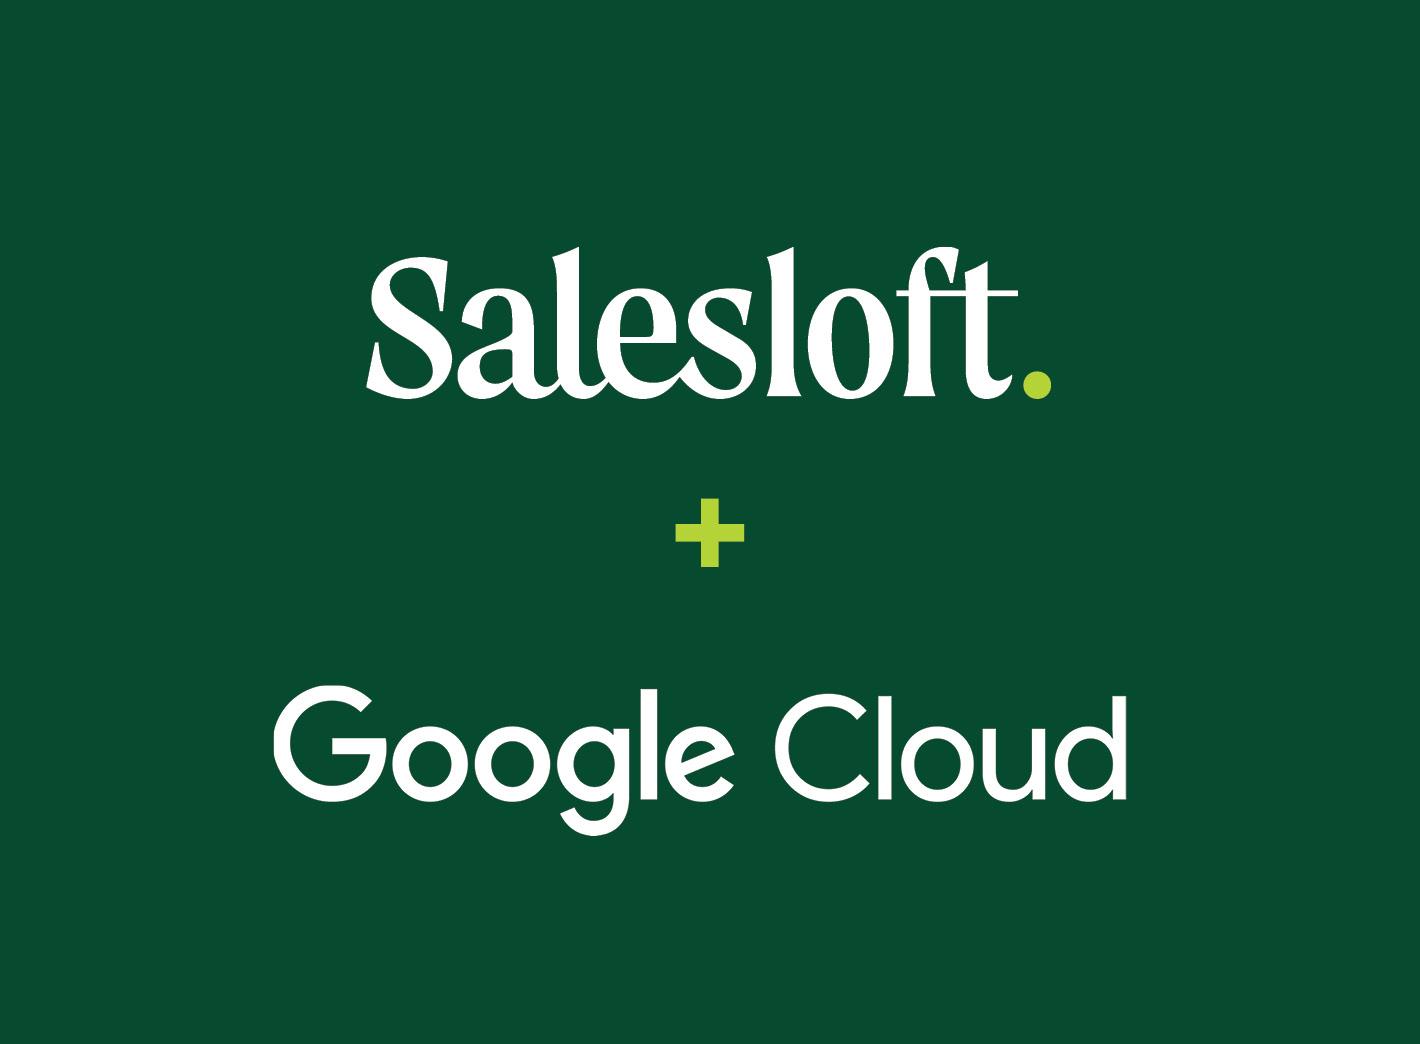 Salesloft and Google Cloud